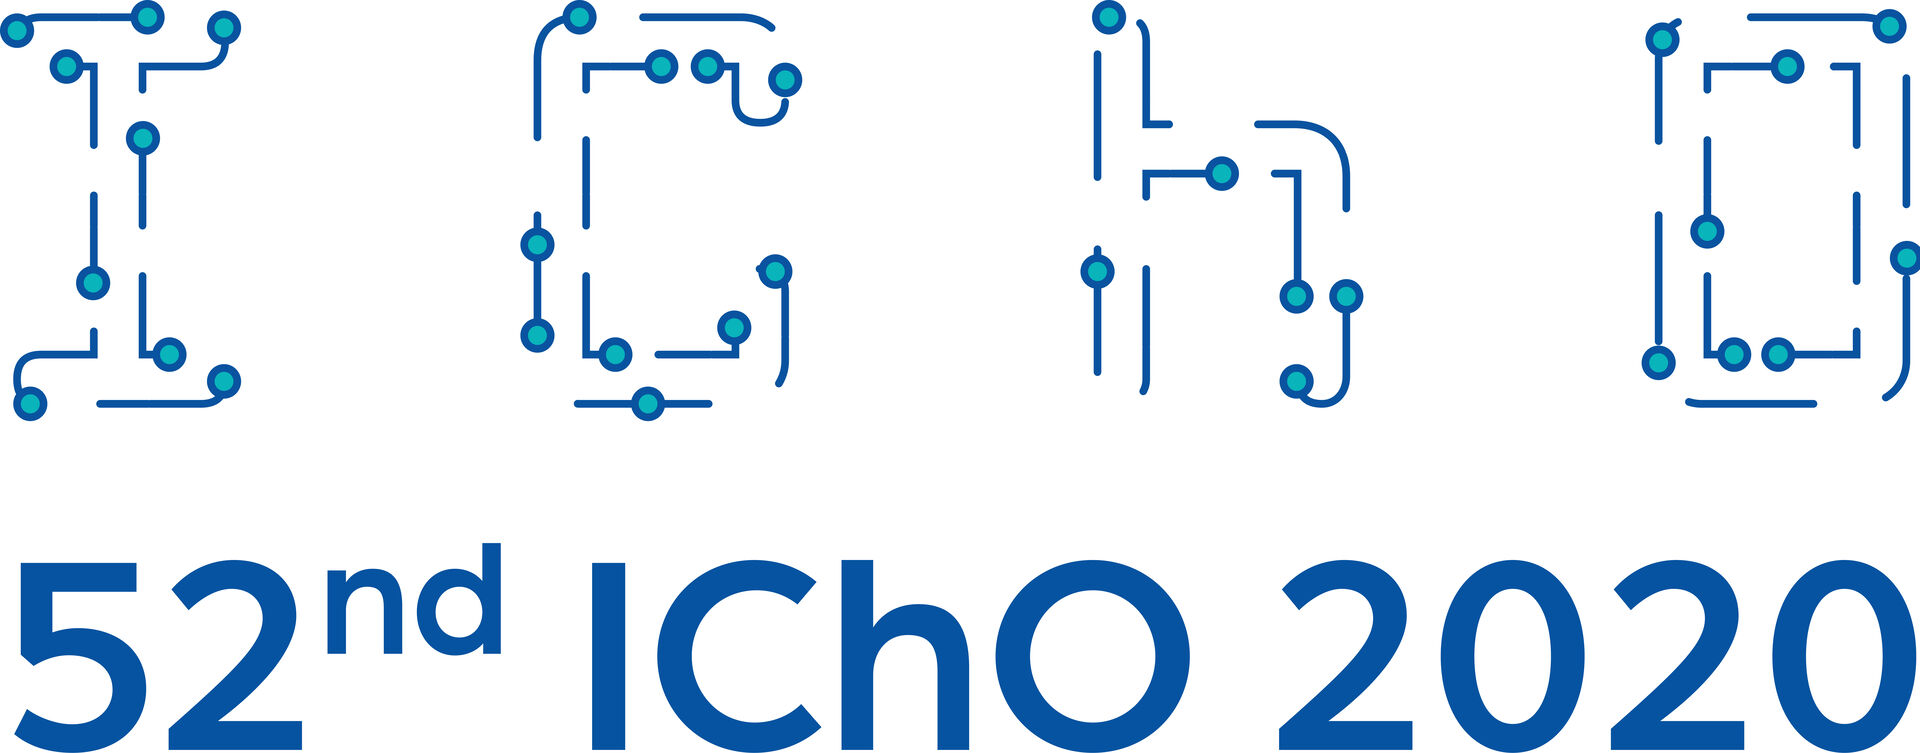 IChO2020